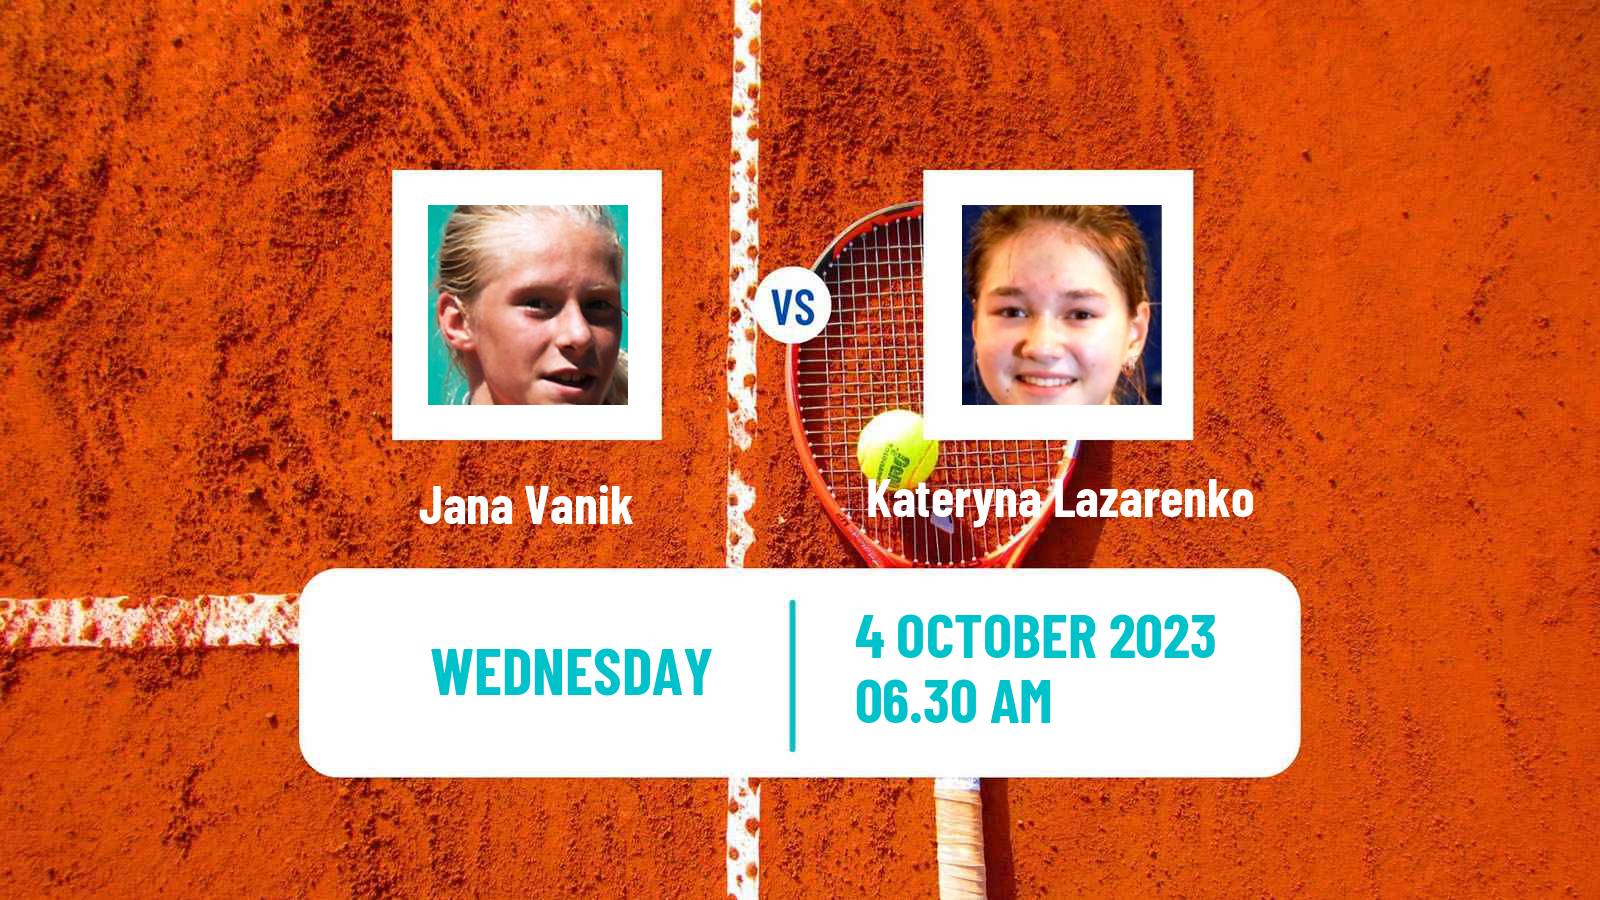 Tennis ITF W15 Bad Waltersdorf Women Jana Vanik - Kateryna Lazarenko